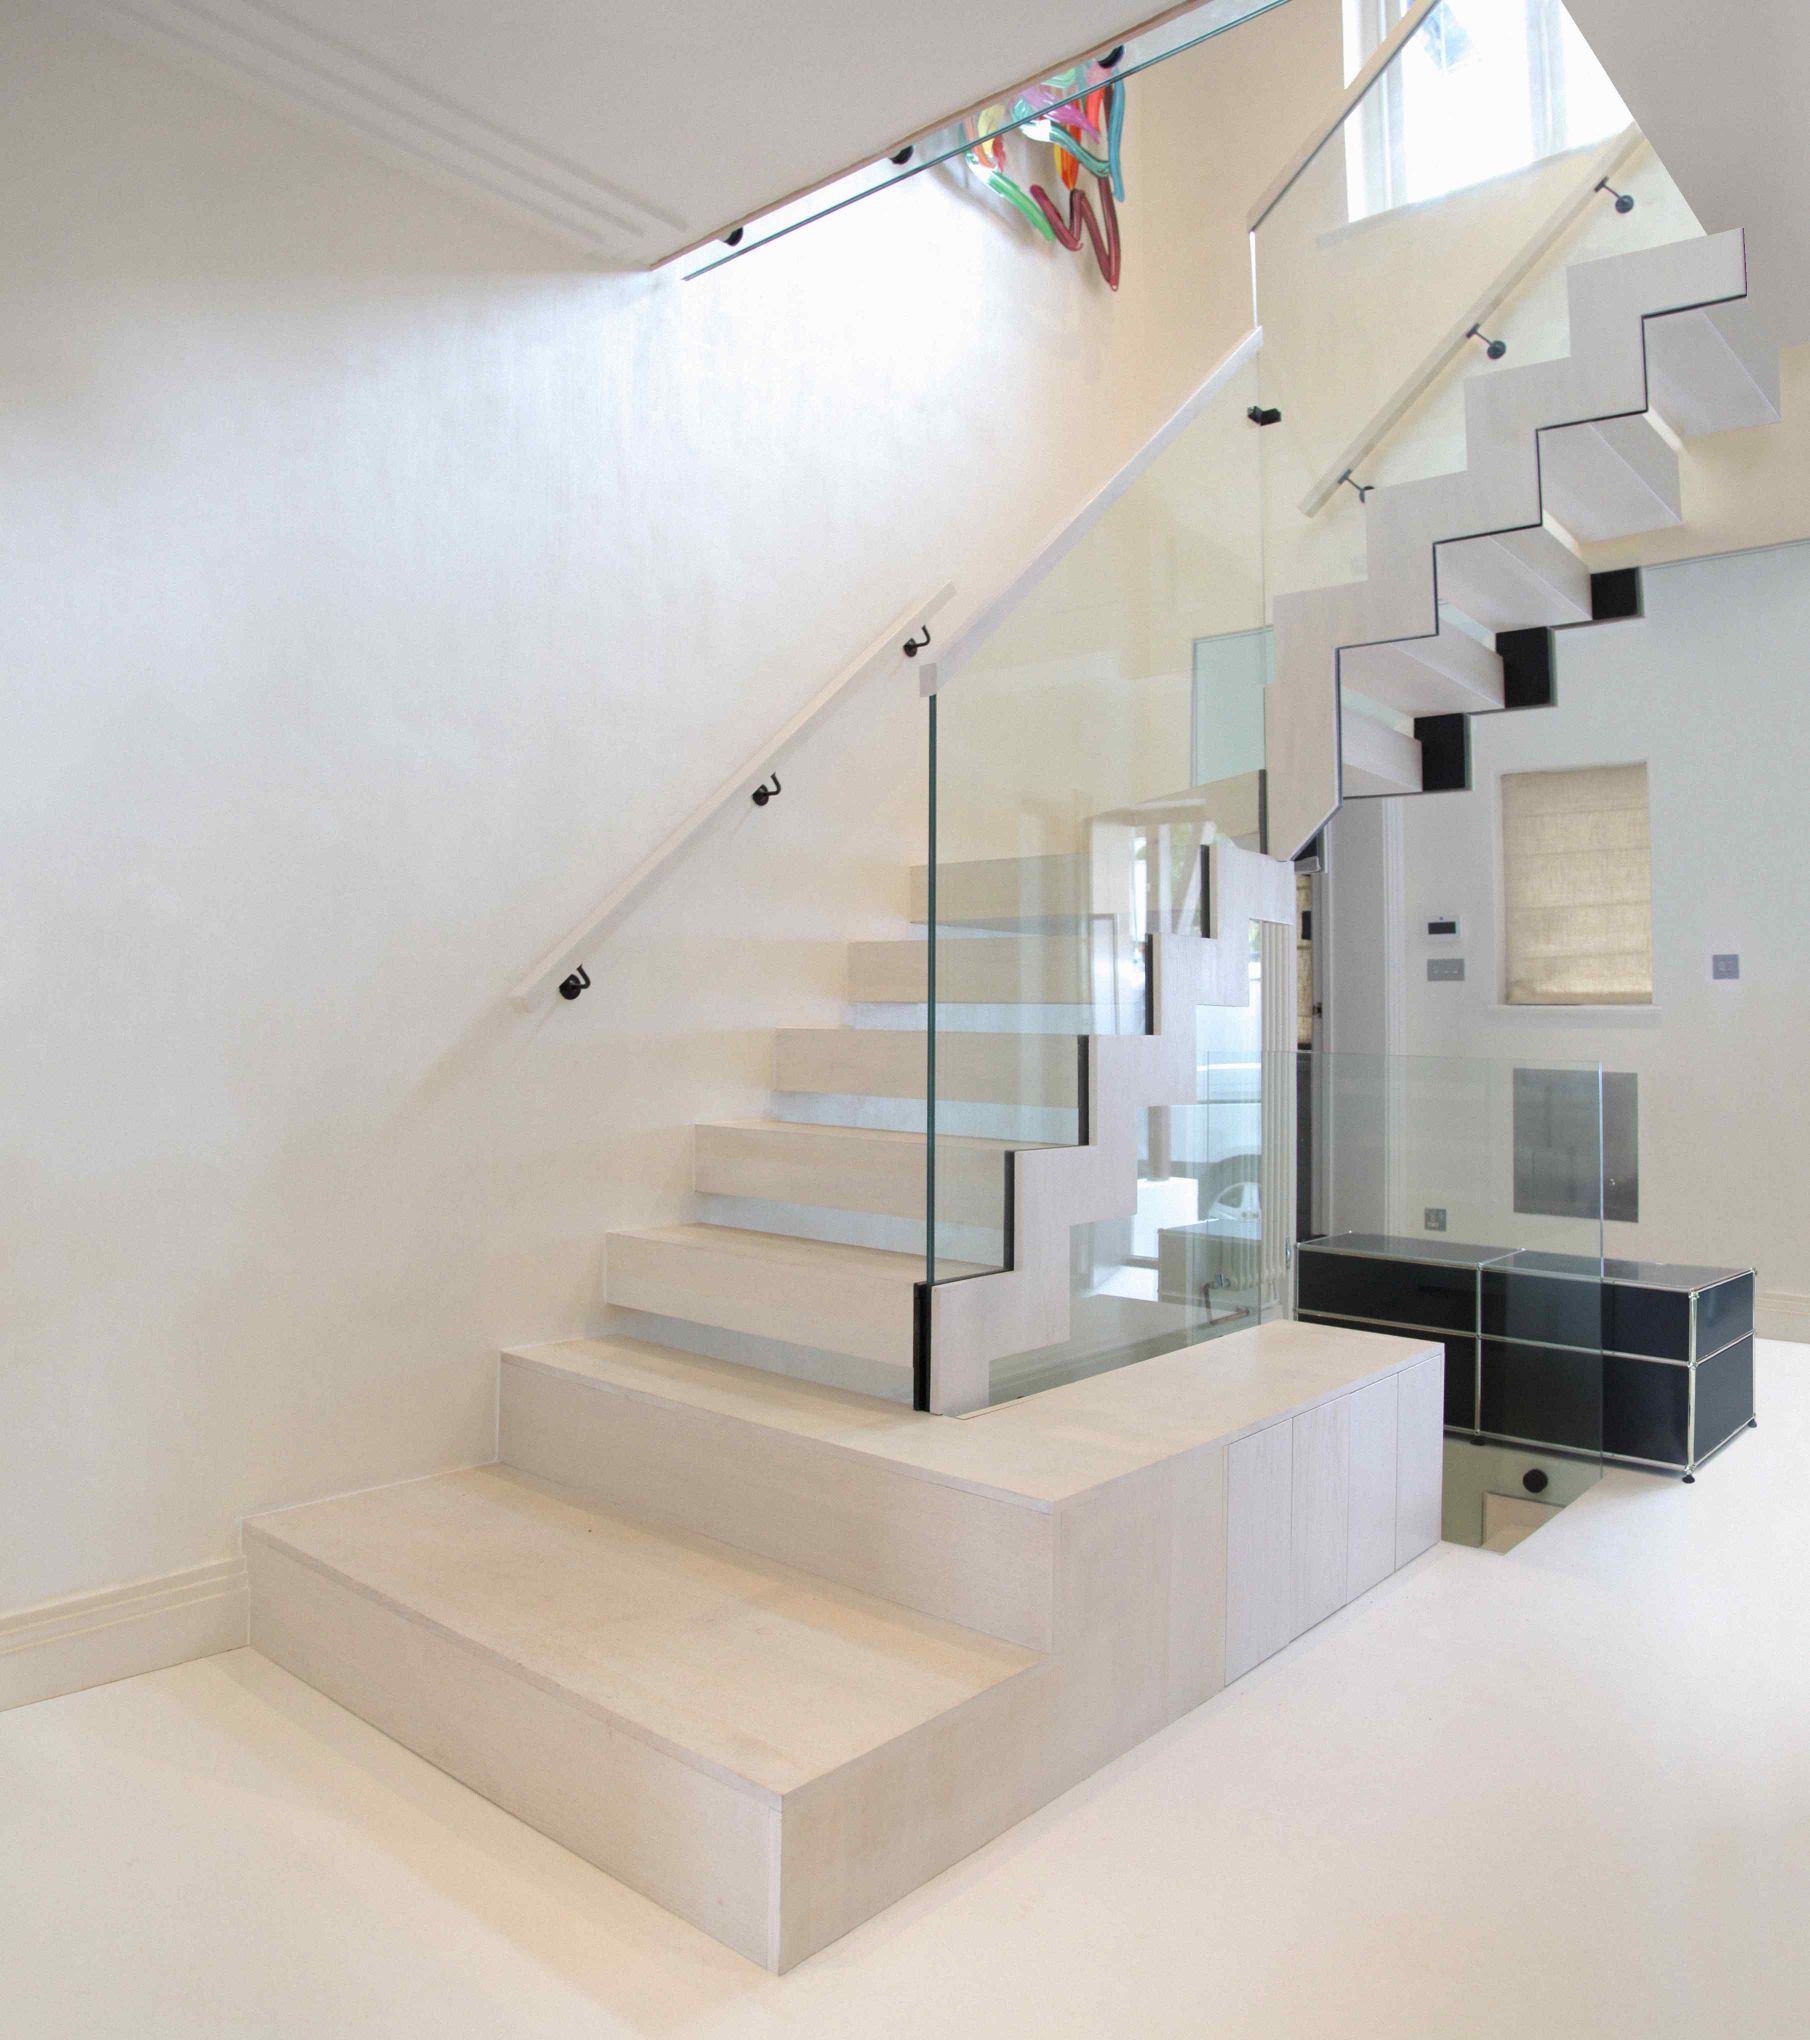 Bespoke ZIG-ZAG staircase with Glass balustrade